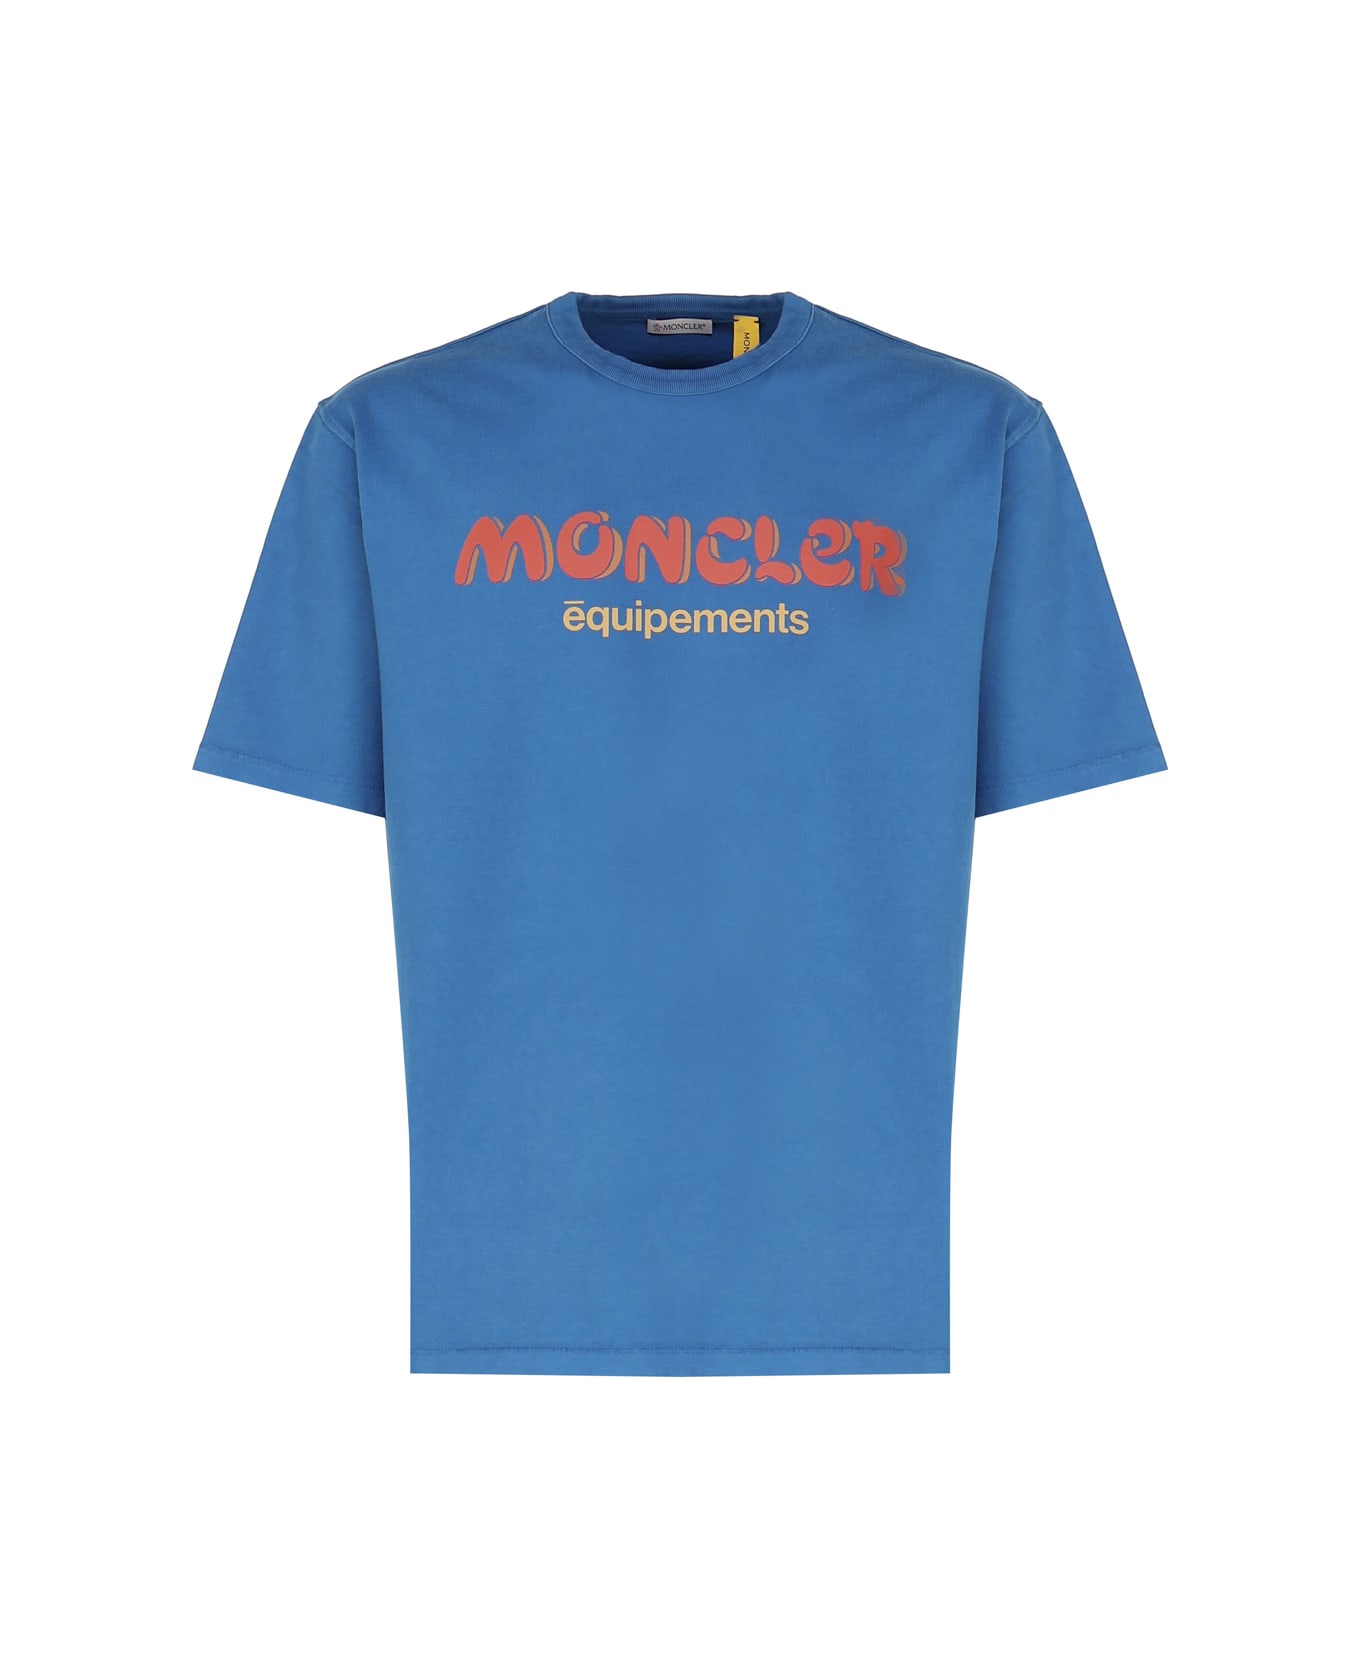 Moncler Genius Moncler X Salehe Bembury T-shirt - Light blue Tシャツ